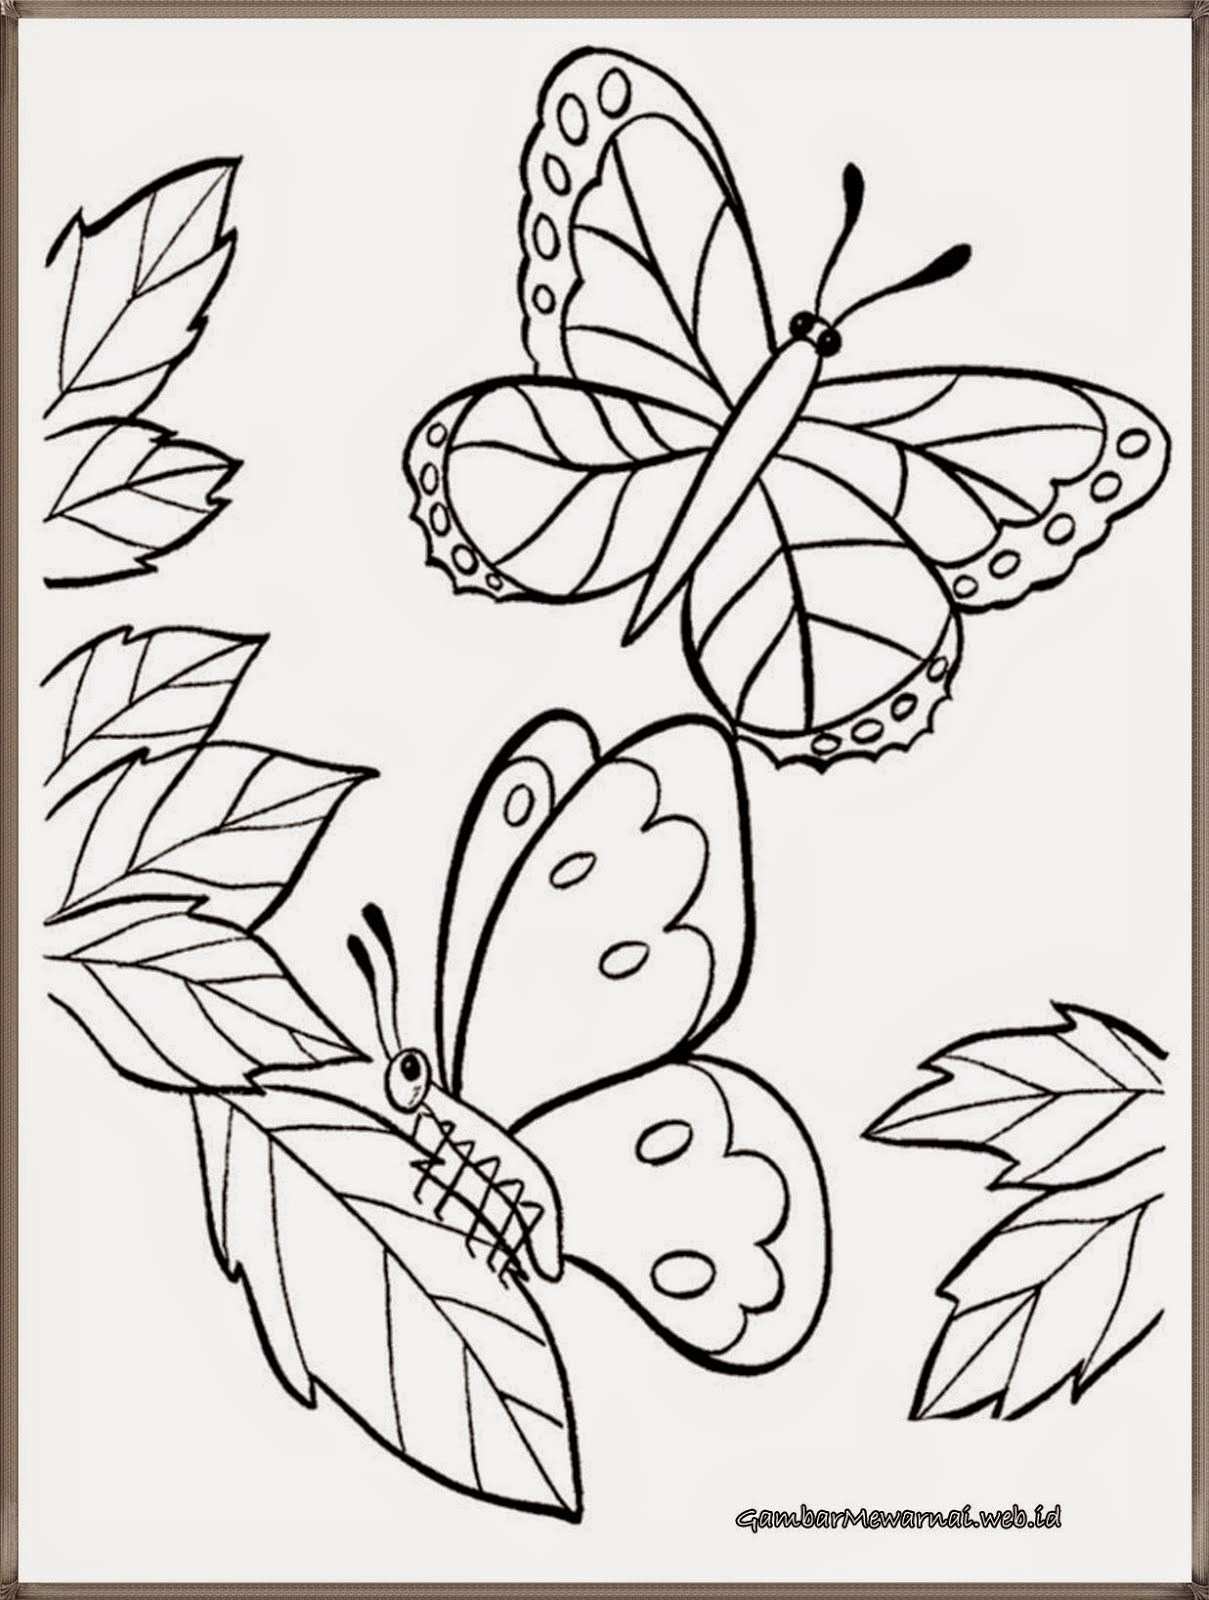 gambar yang bagus buat wallpaper,white,coloring book,line art,butterfly,leaf